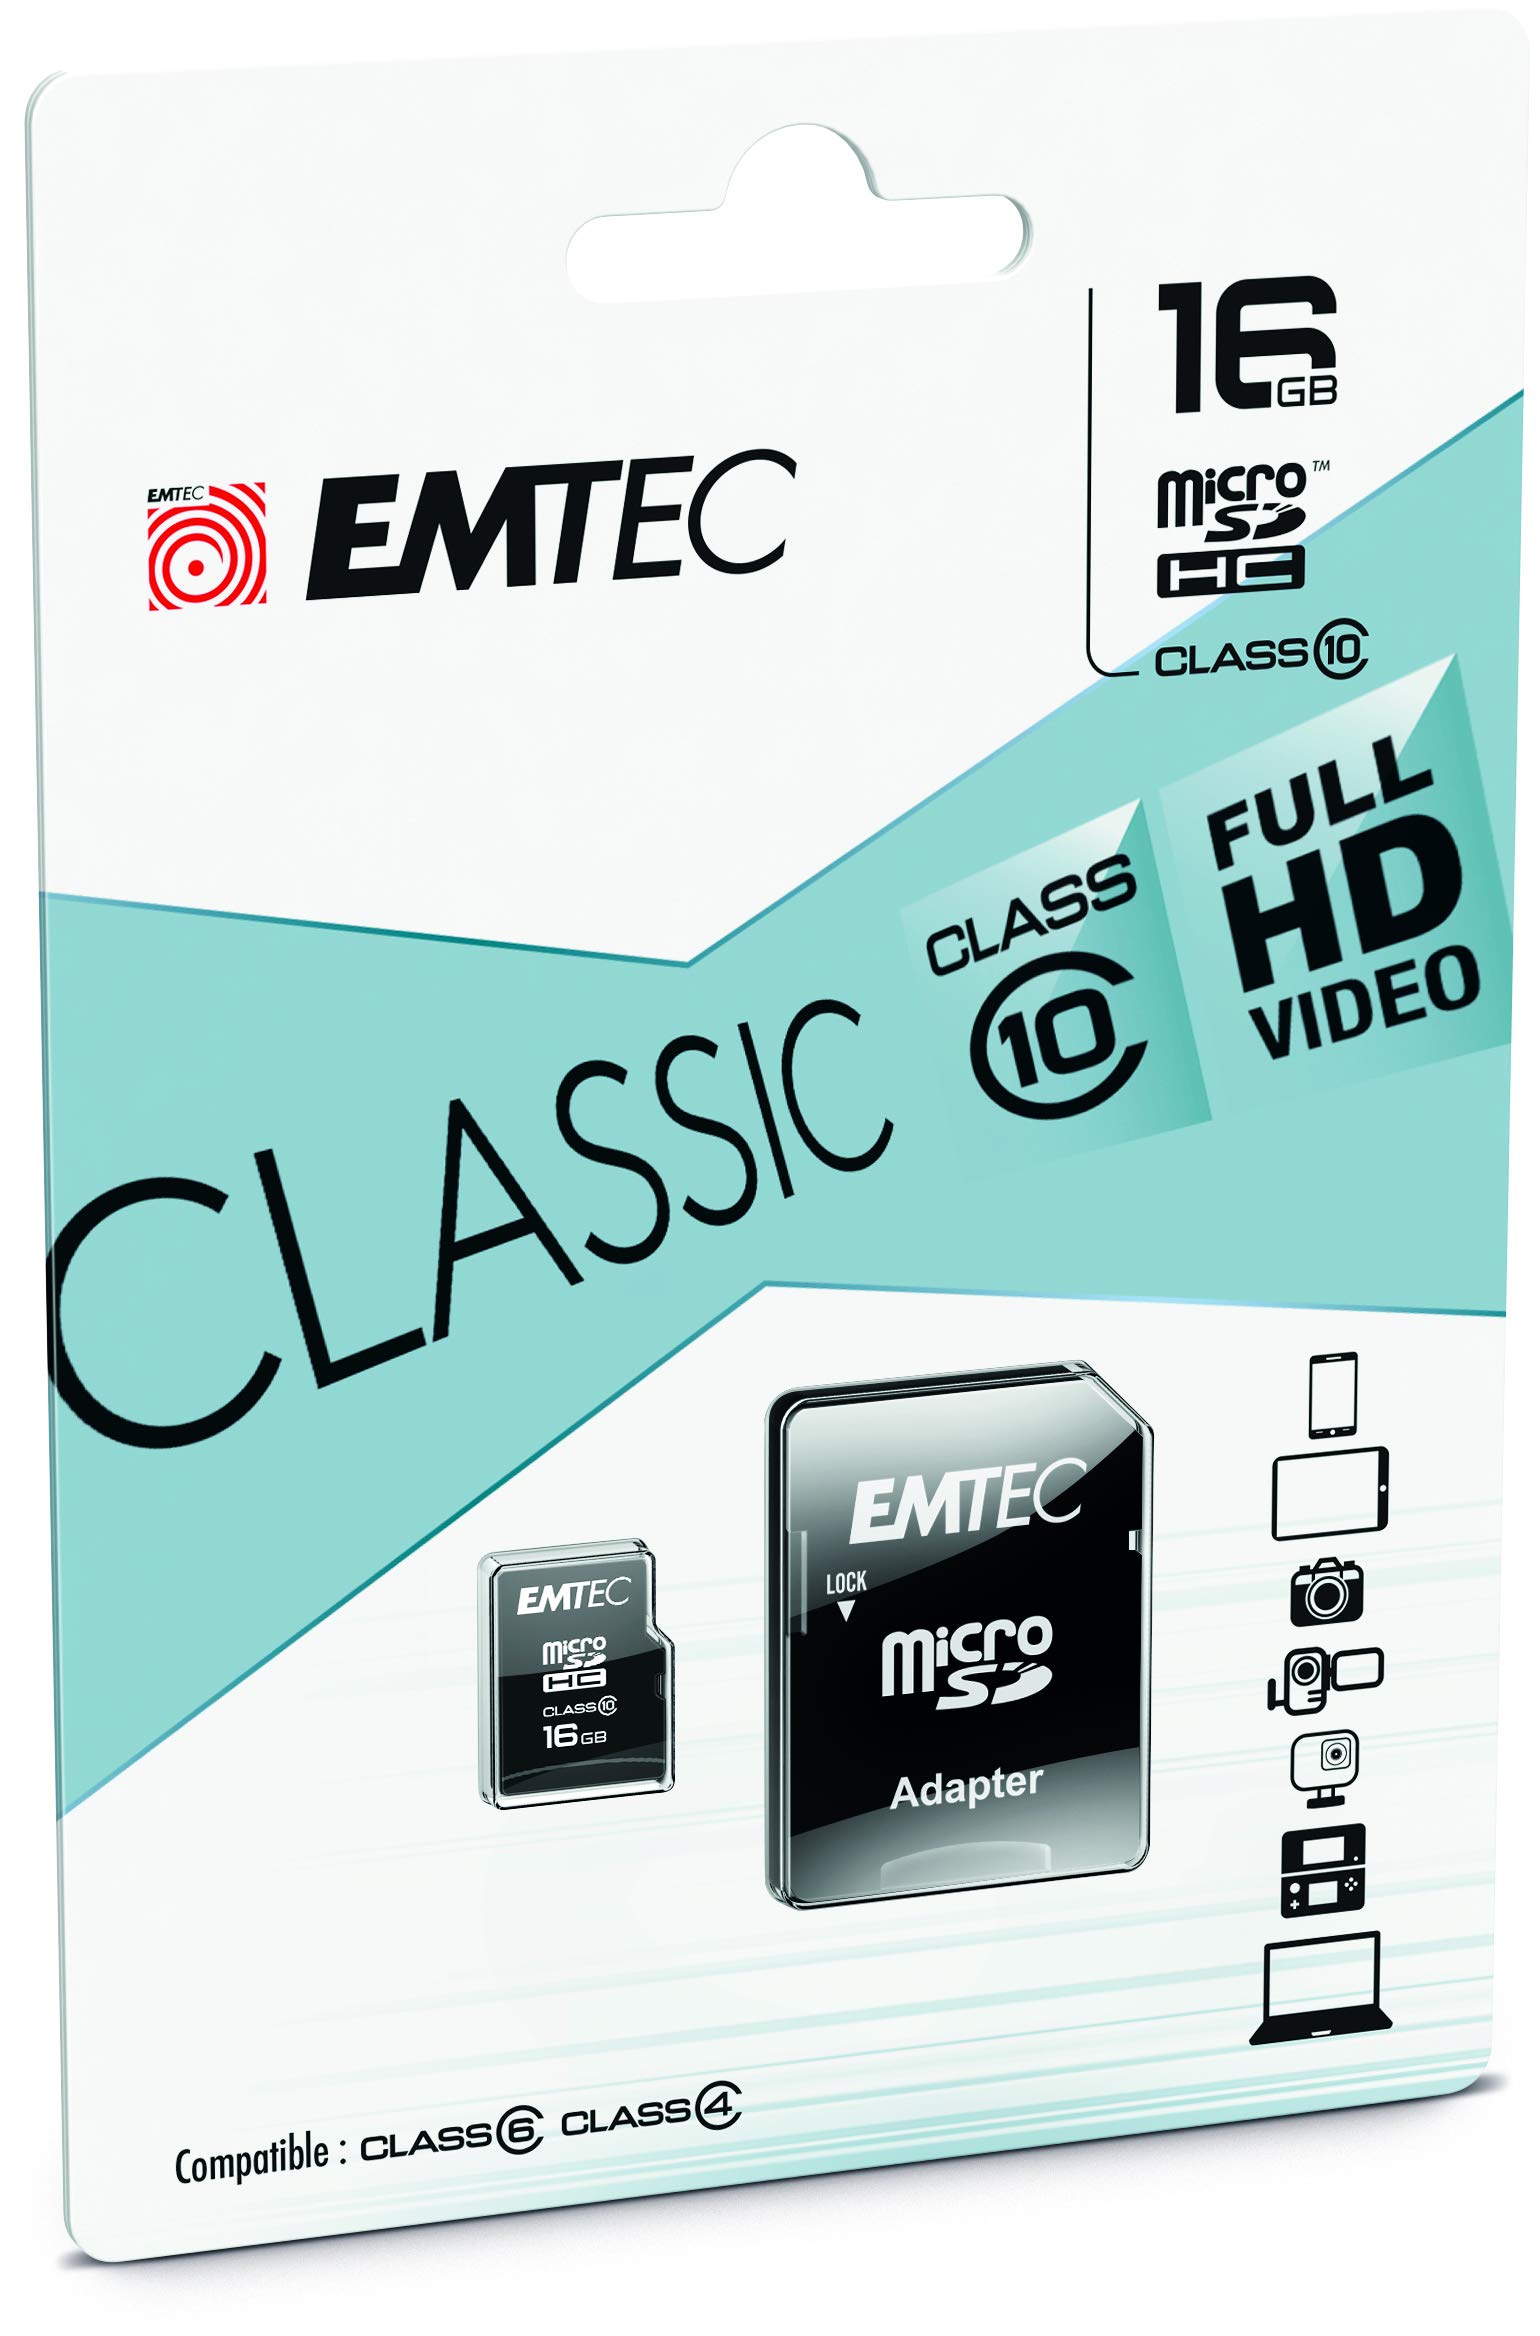 Emtec - Micro SDHC Class 10 Classic - ECMSDM16GHC10CG - 16GB